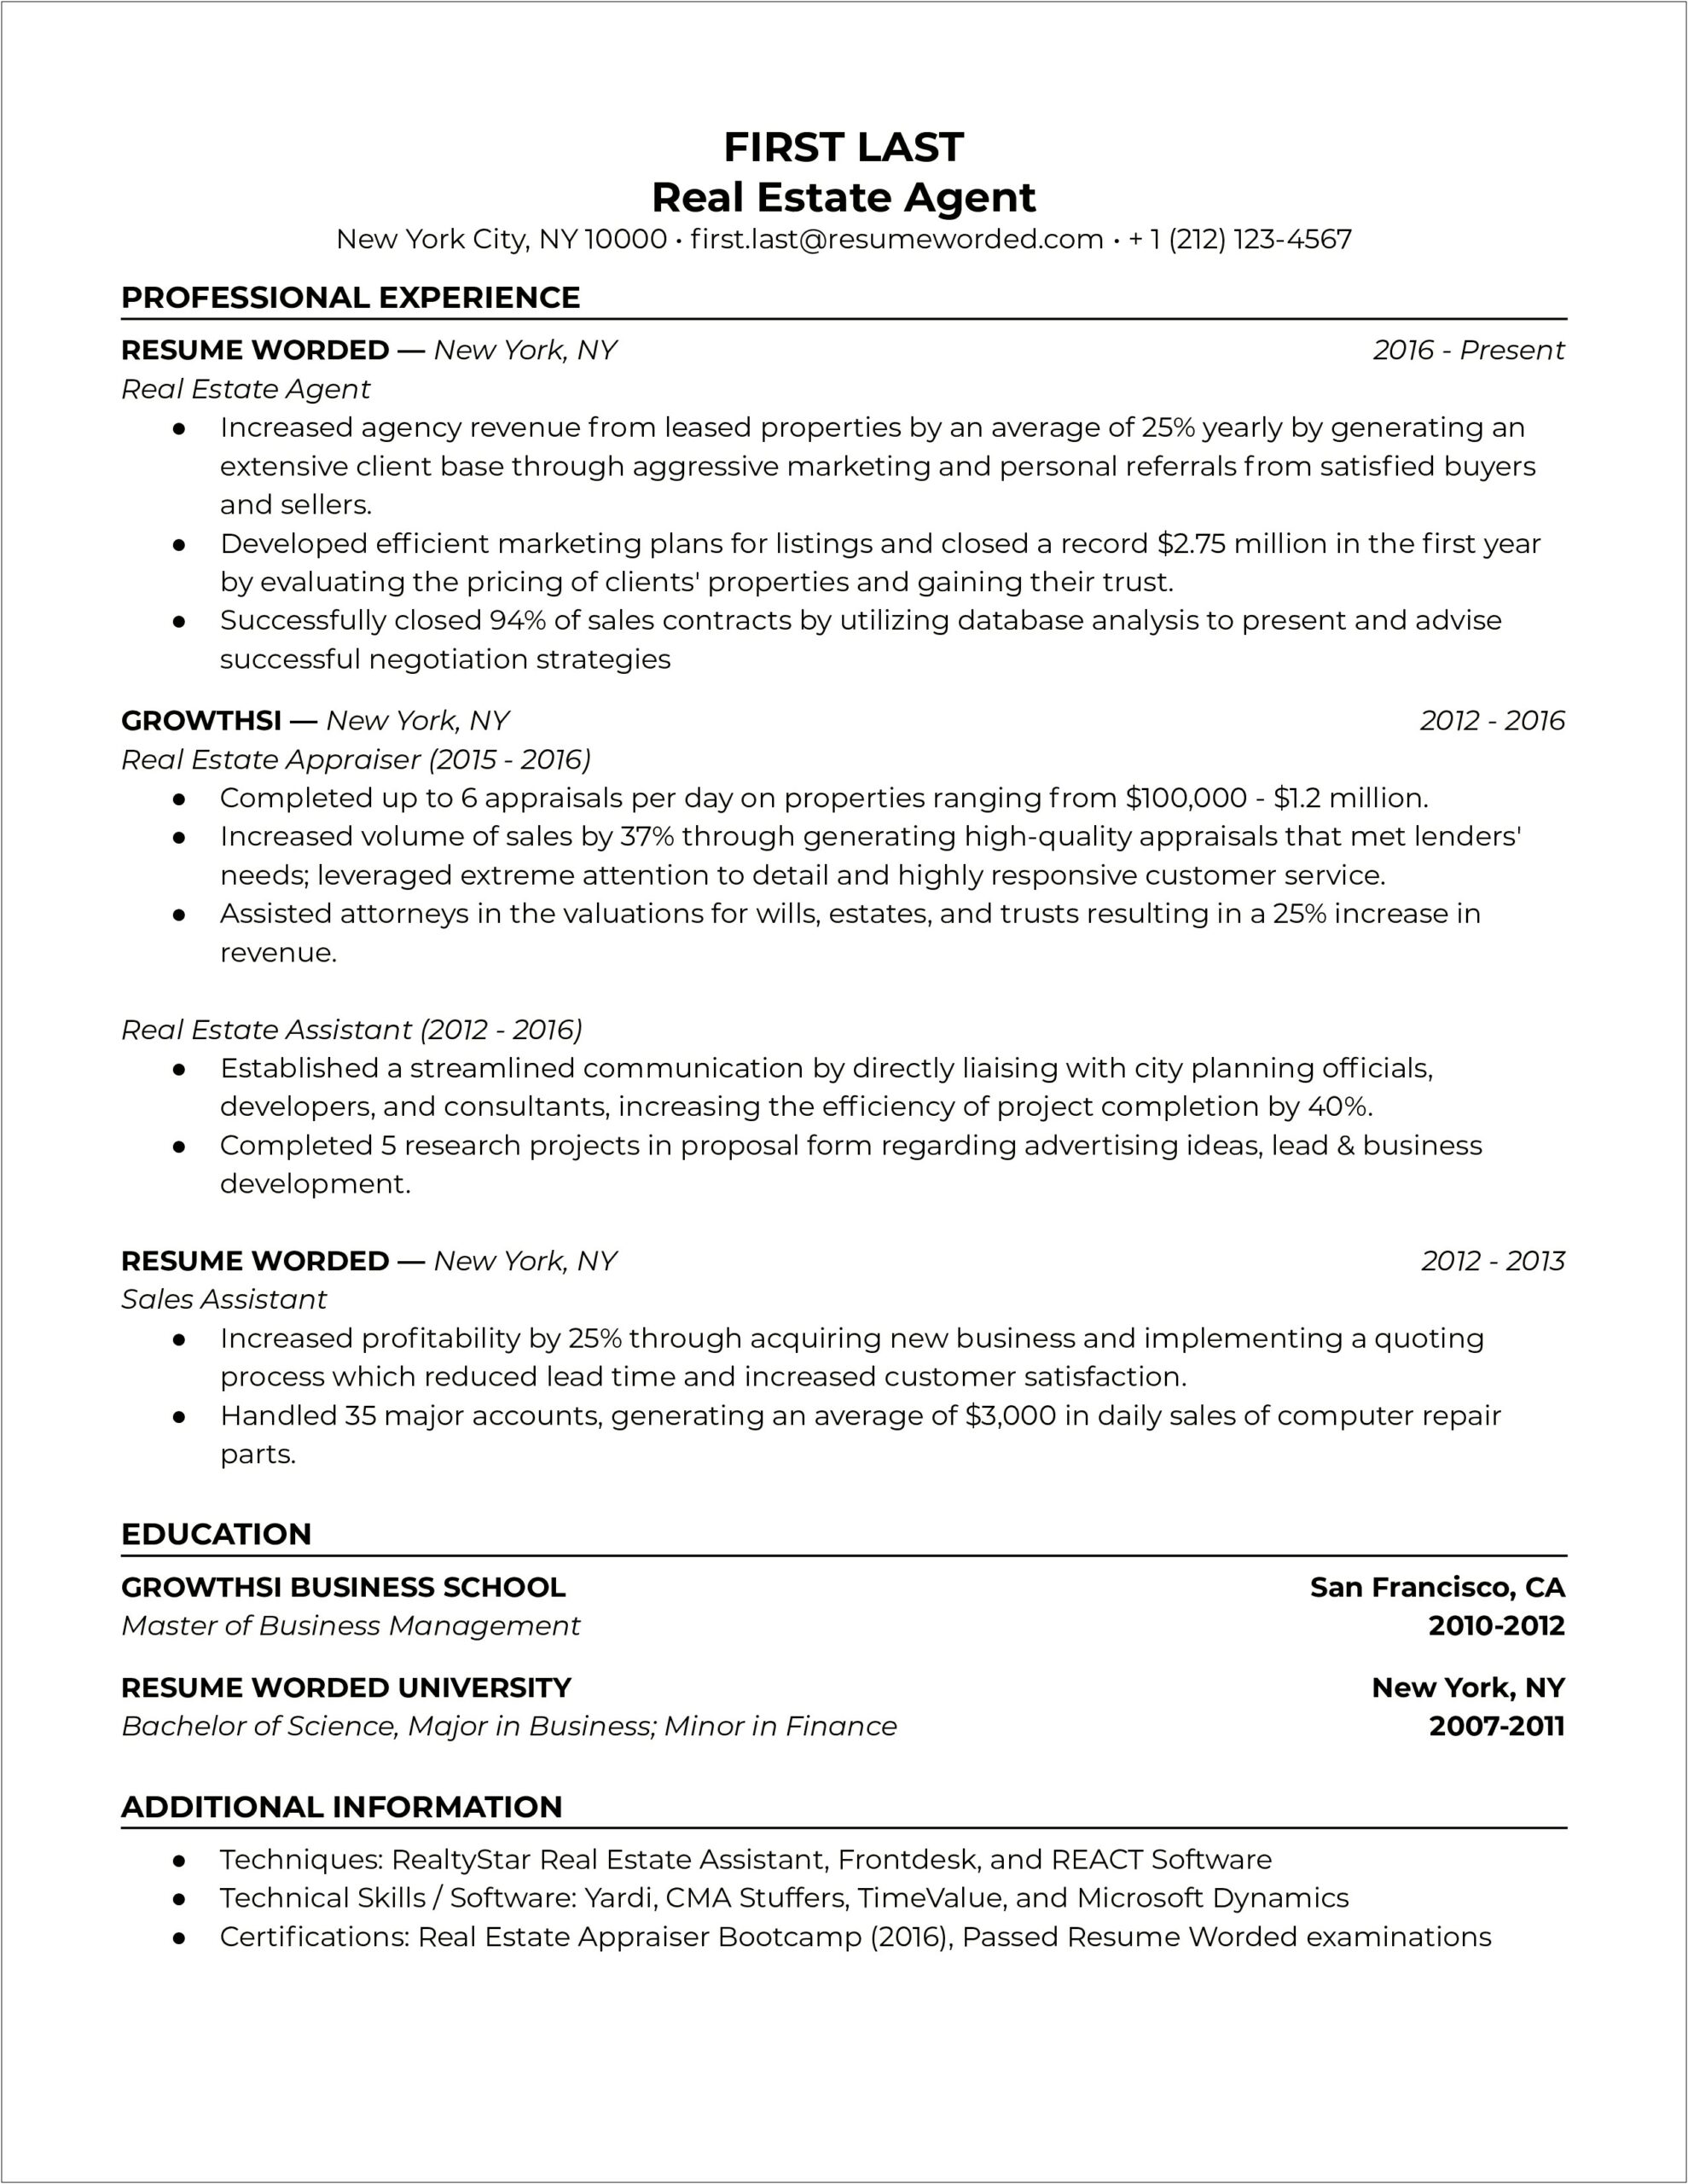 Real Estate Appraiser Job Description Resume